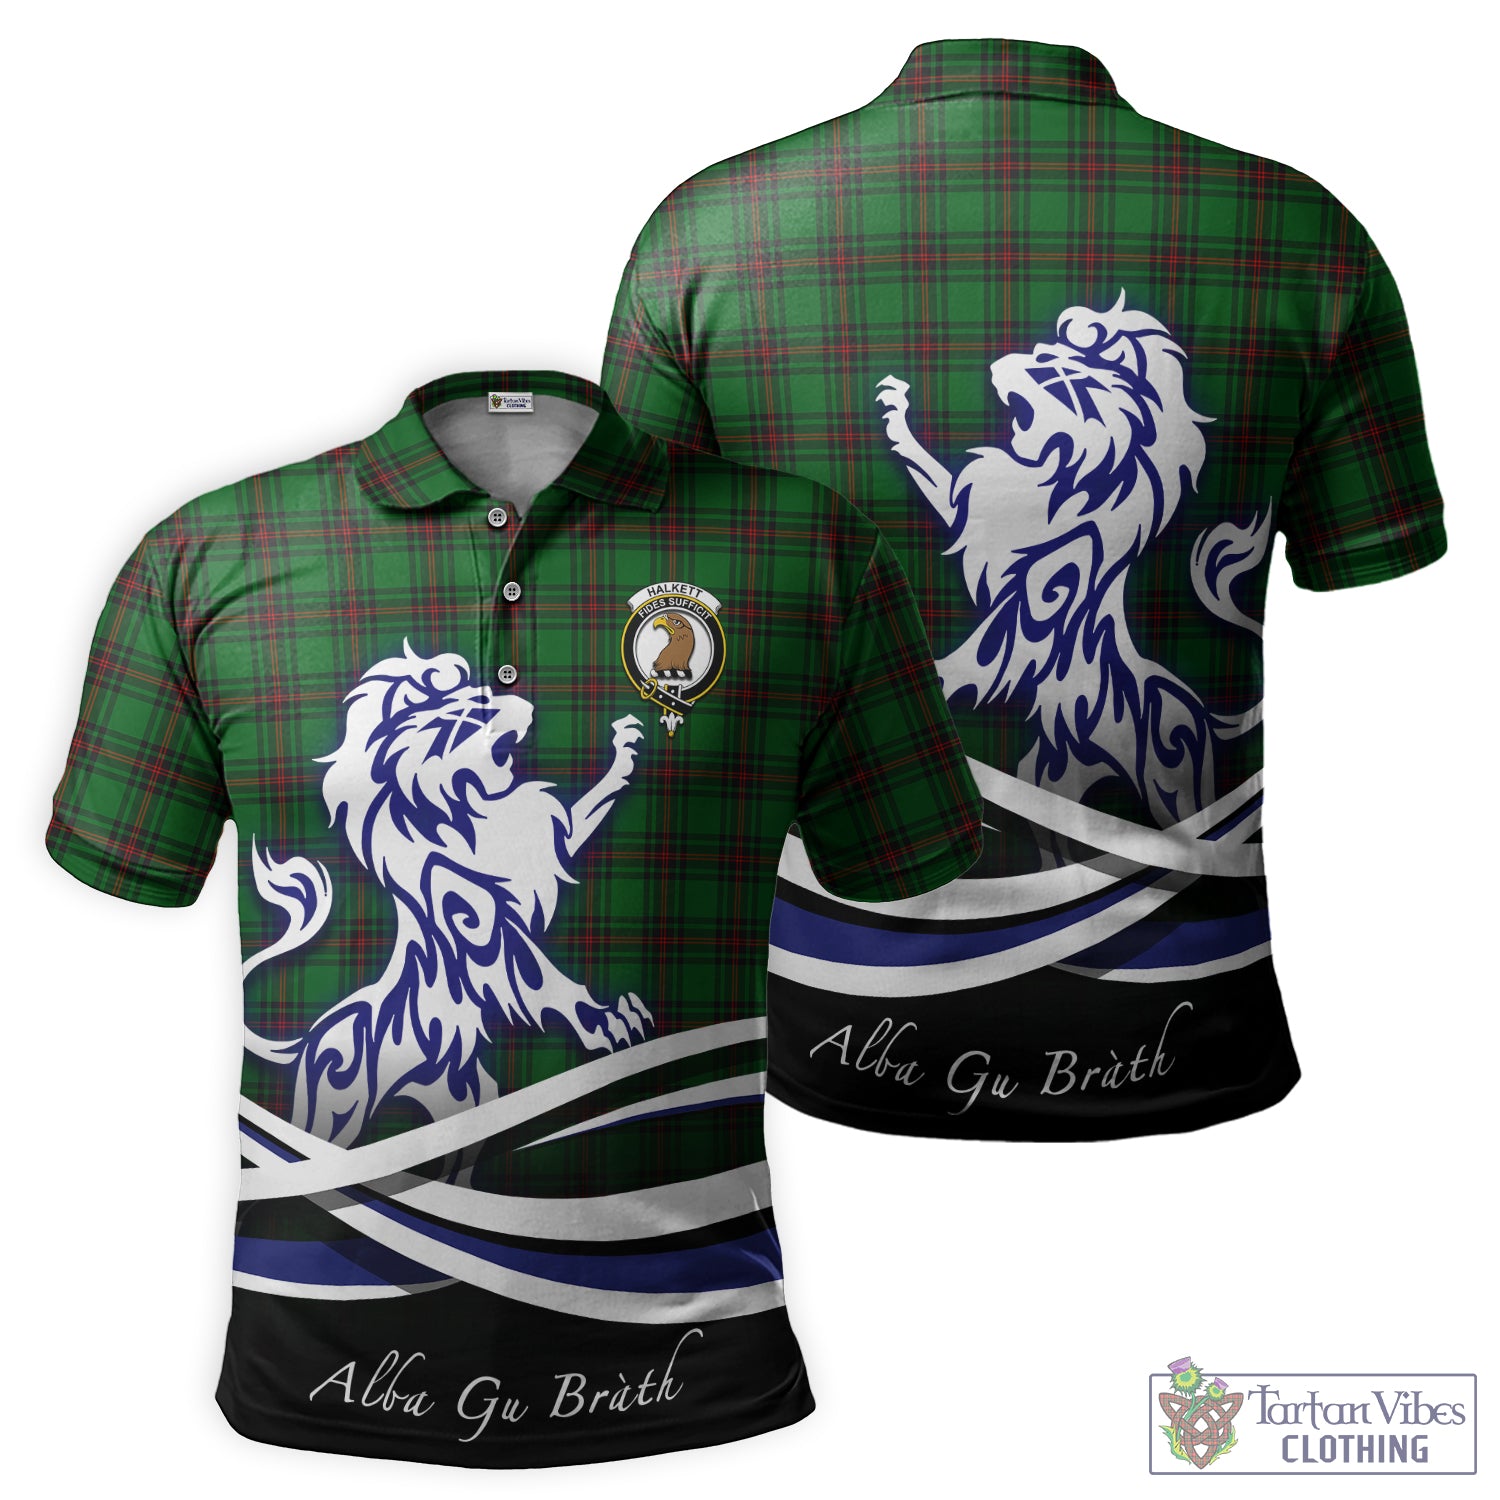 halkett-tartan-polo-shirt-with-alba-gu-brath-regal-lion-emblem